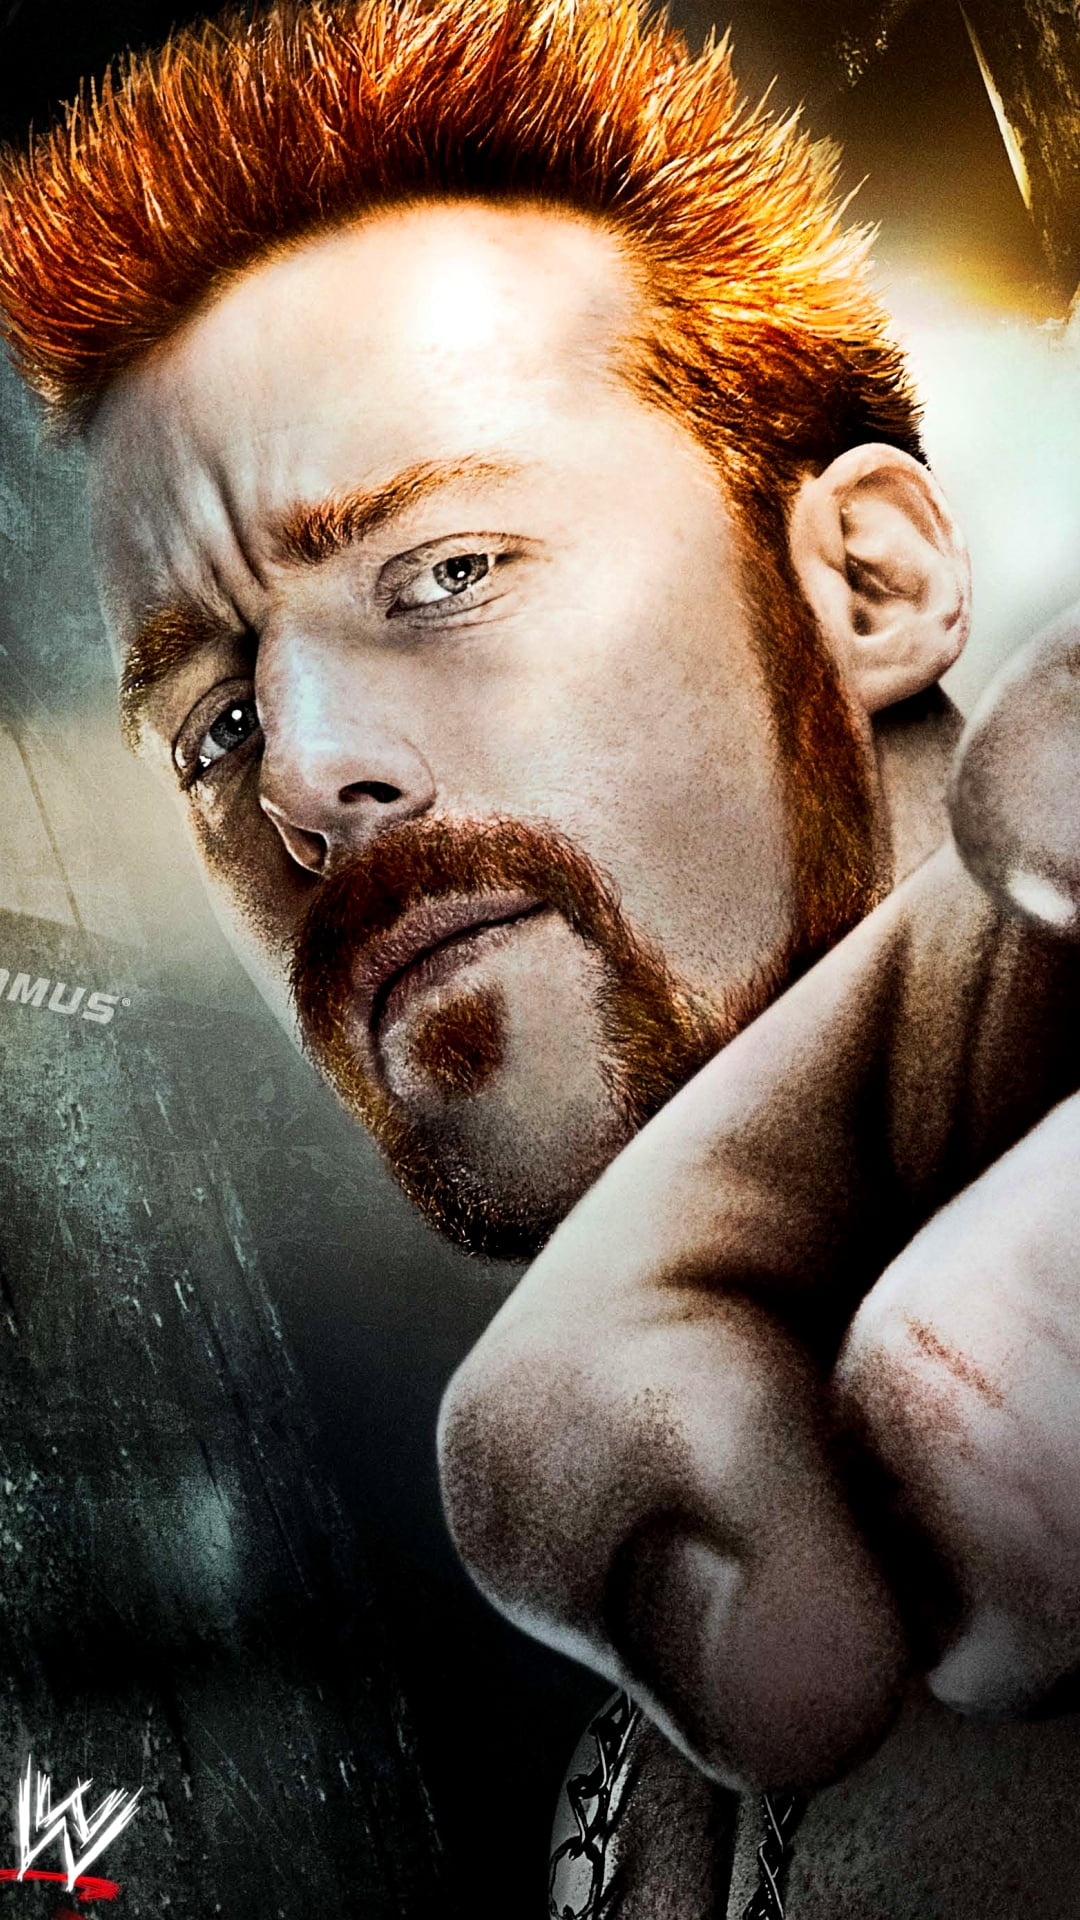 Sheamus Wrestler, WWE poster, portrait, beard, facial hair, one person